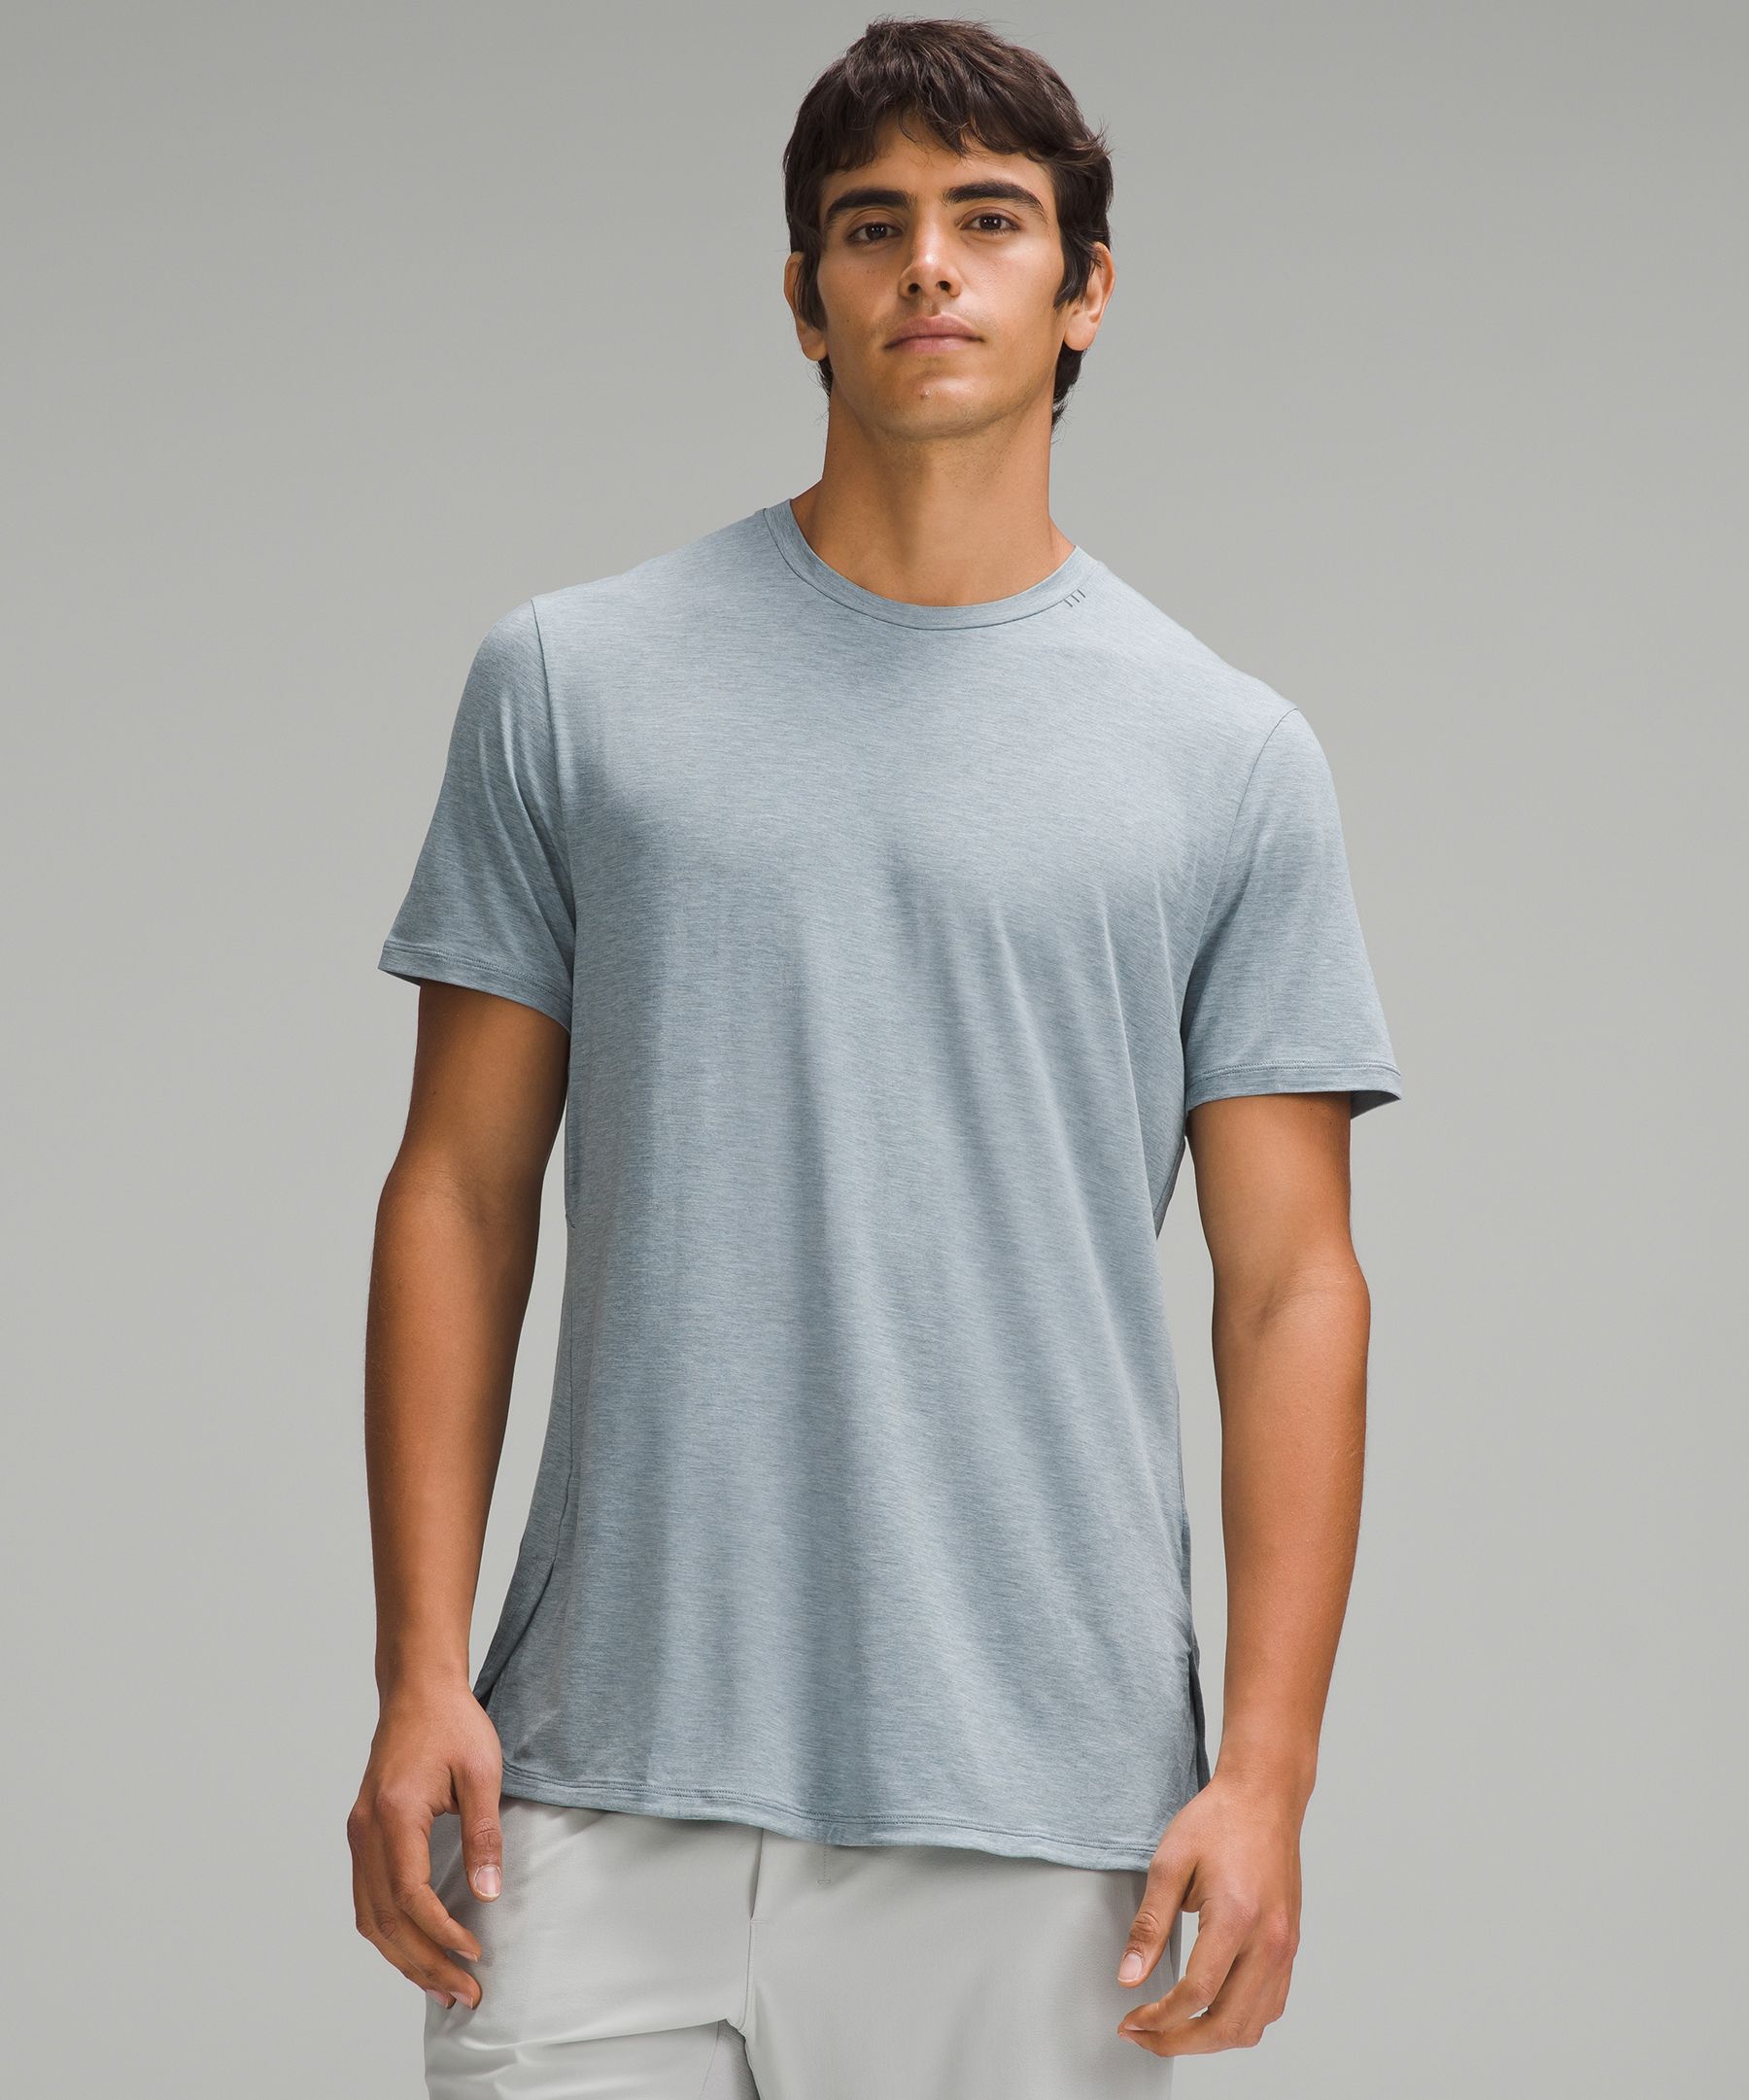 Balancer Short-Sleeve Shirt | Men's Short Sleeve Shirts & Tee's | lululemon